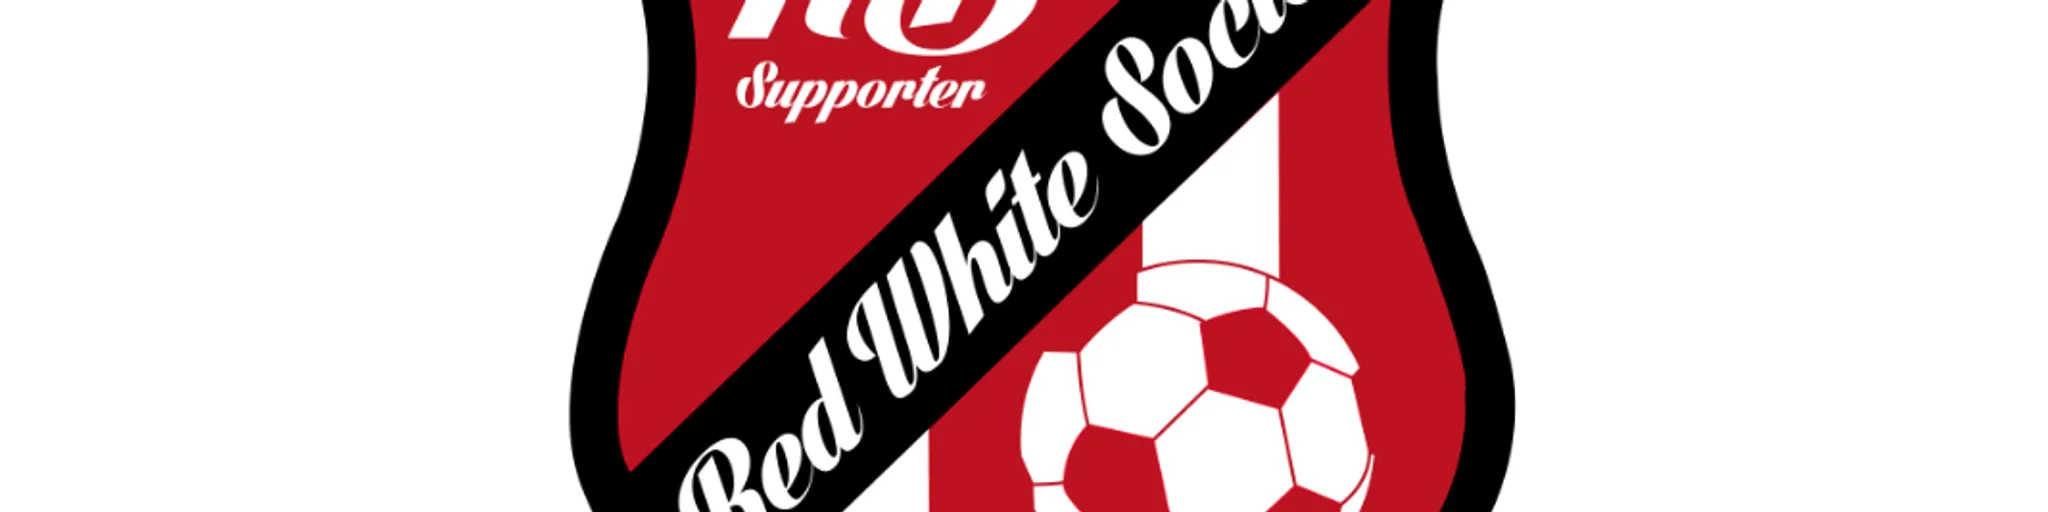 Red White Society, OFC seit 22. Dezember 2014